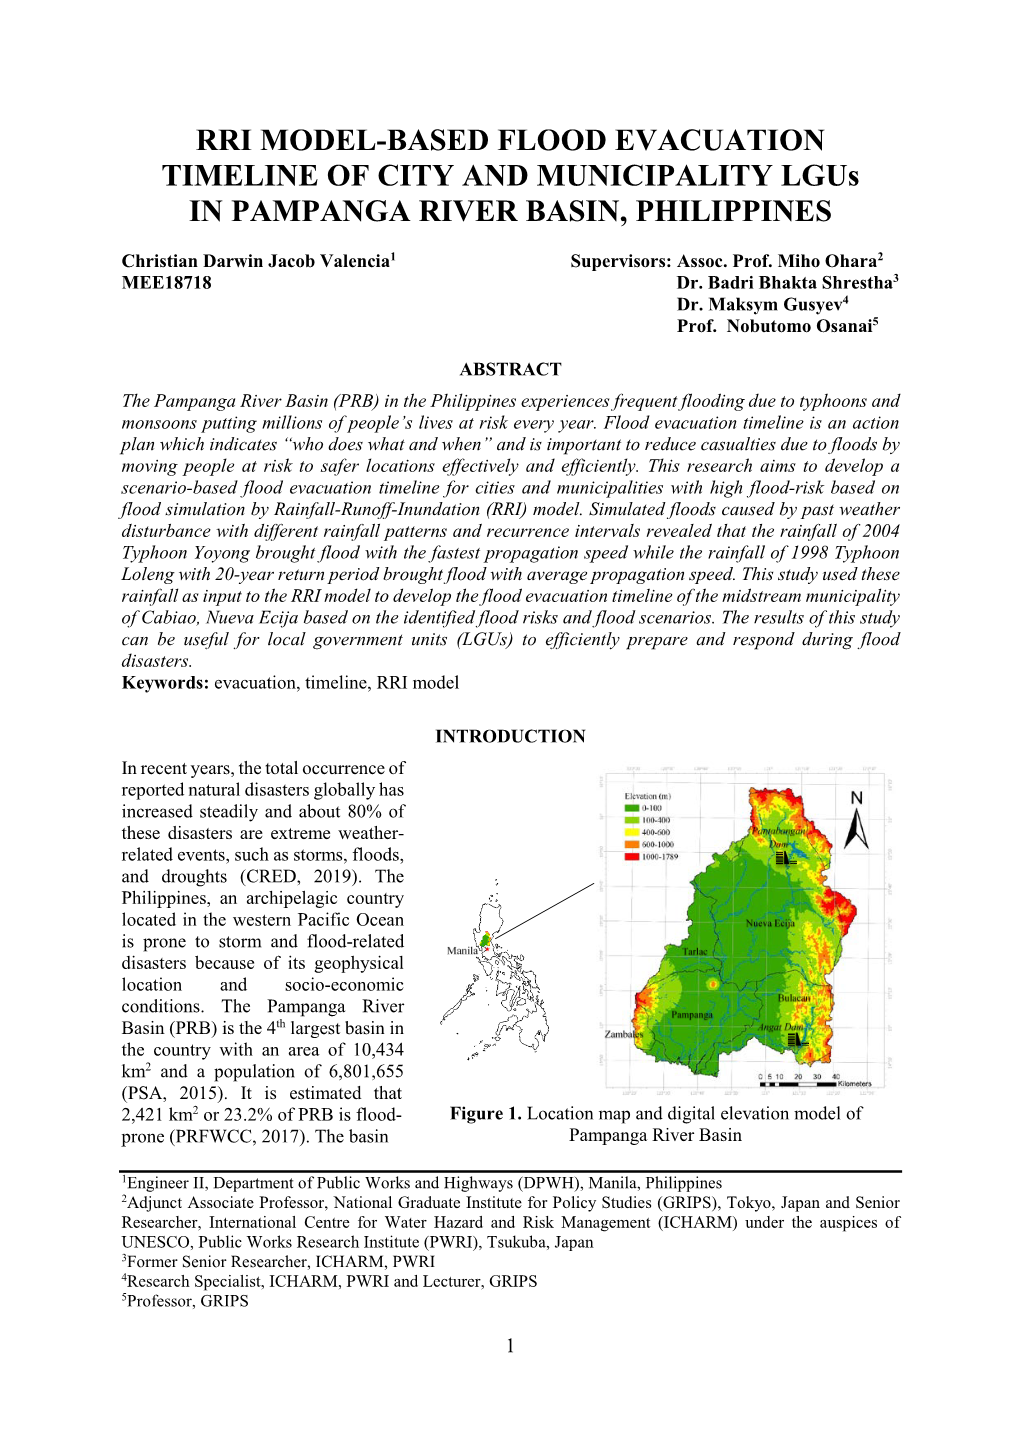 RRI MODEL-BASED FLOOD EVACUATION TIMELINE of CITY and MUNICIPALITY Lgus in PAMPANGA RIVER BASIN, PHILIPPINES